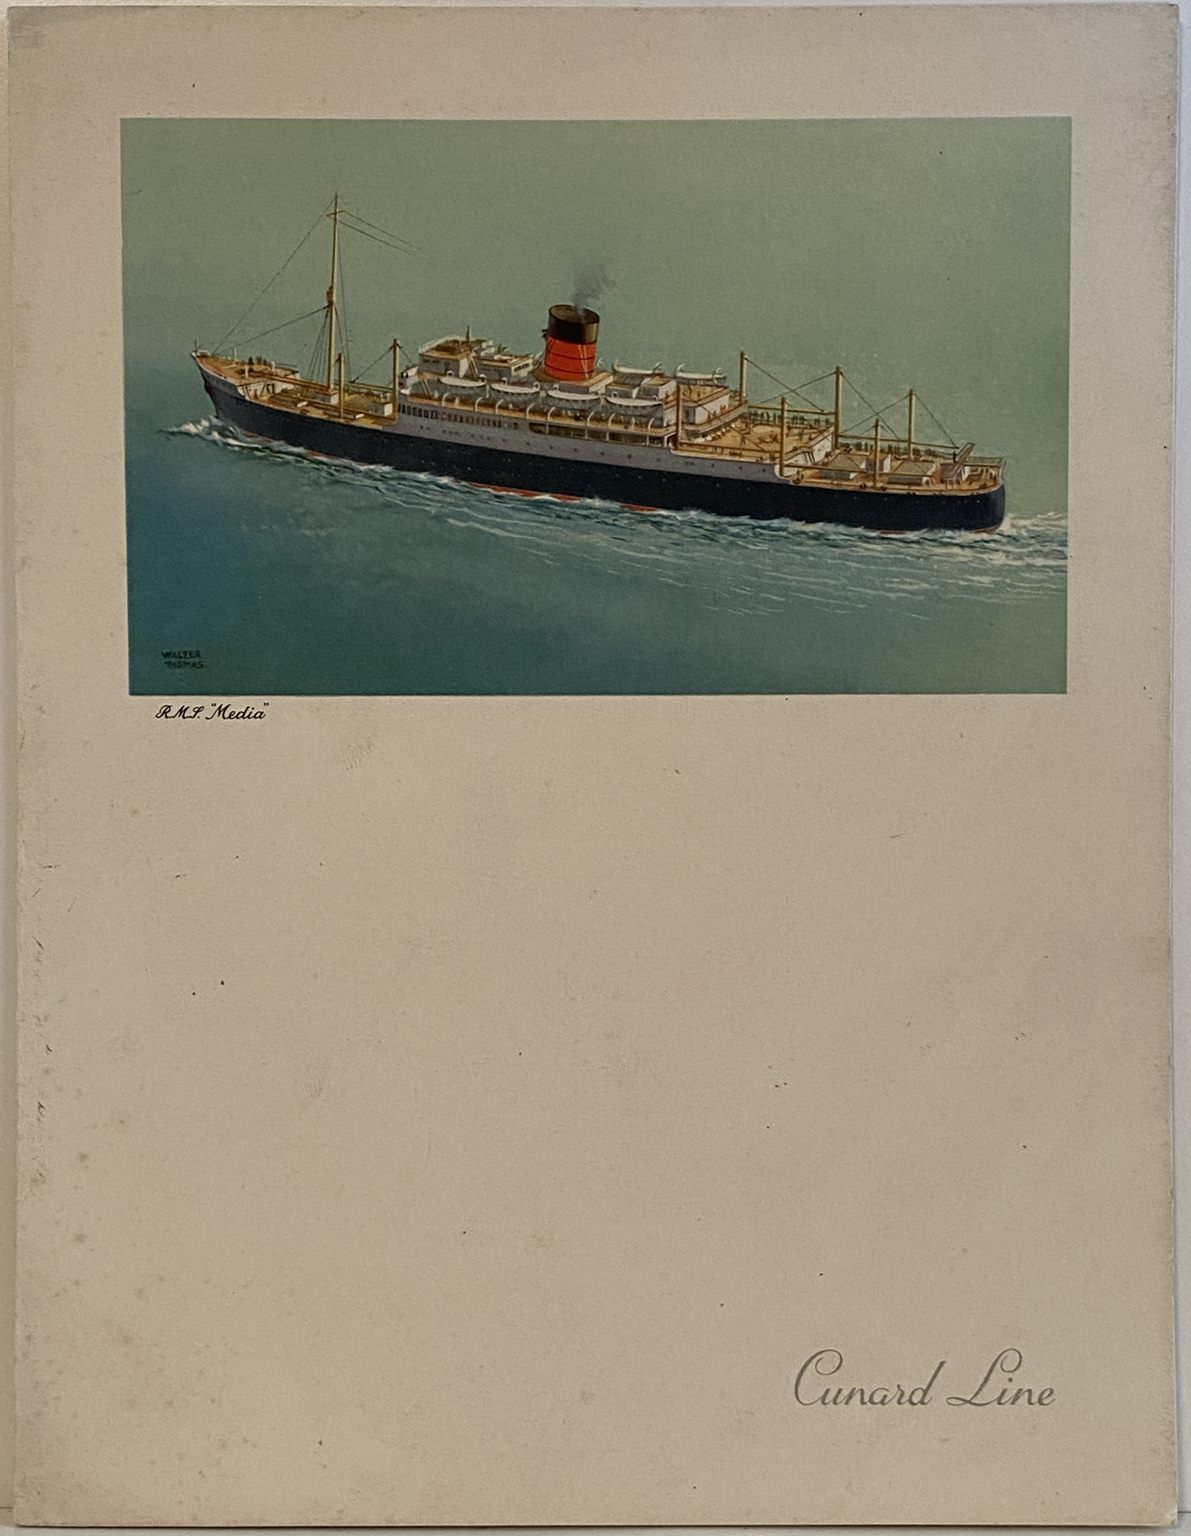 MARITIME MEMORABILIA: Cunard Line - RMS Media - Farewell Menu 29 June 1951